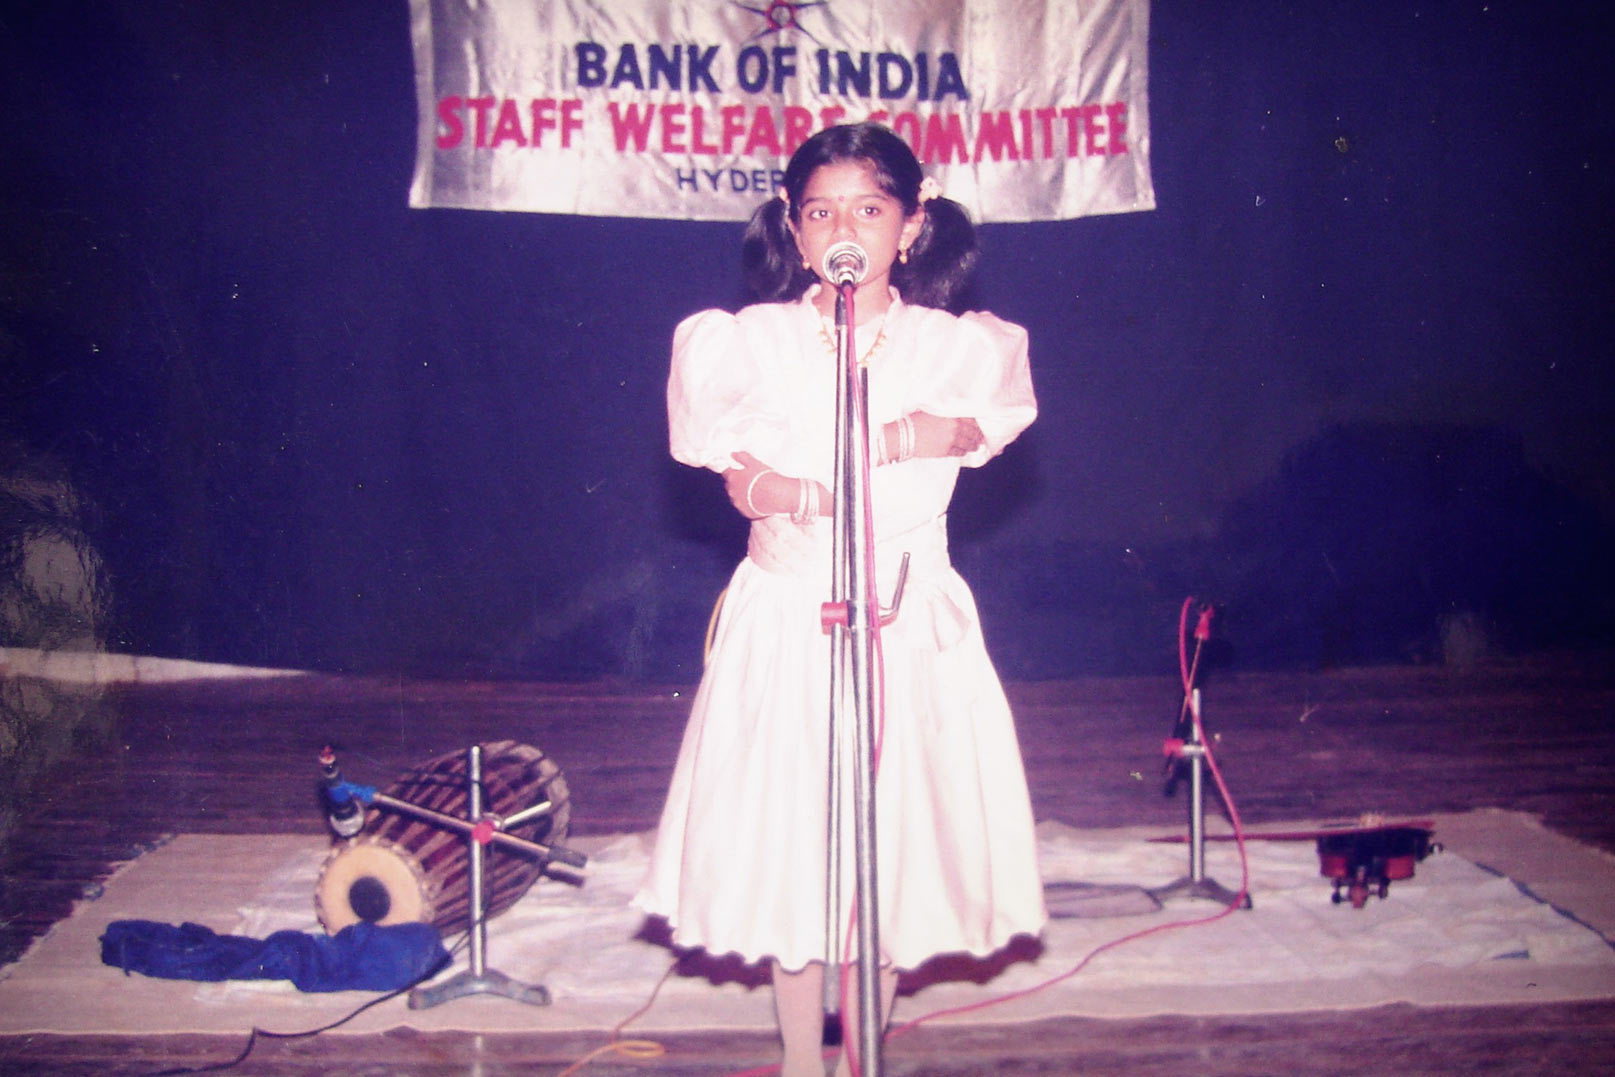 Vidya performing live as a child